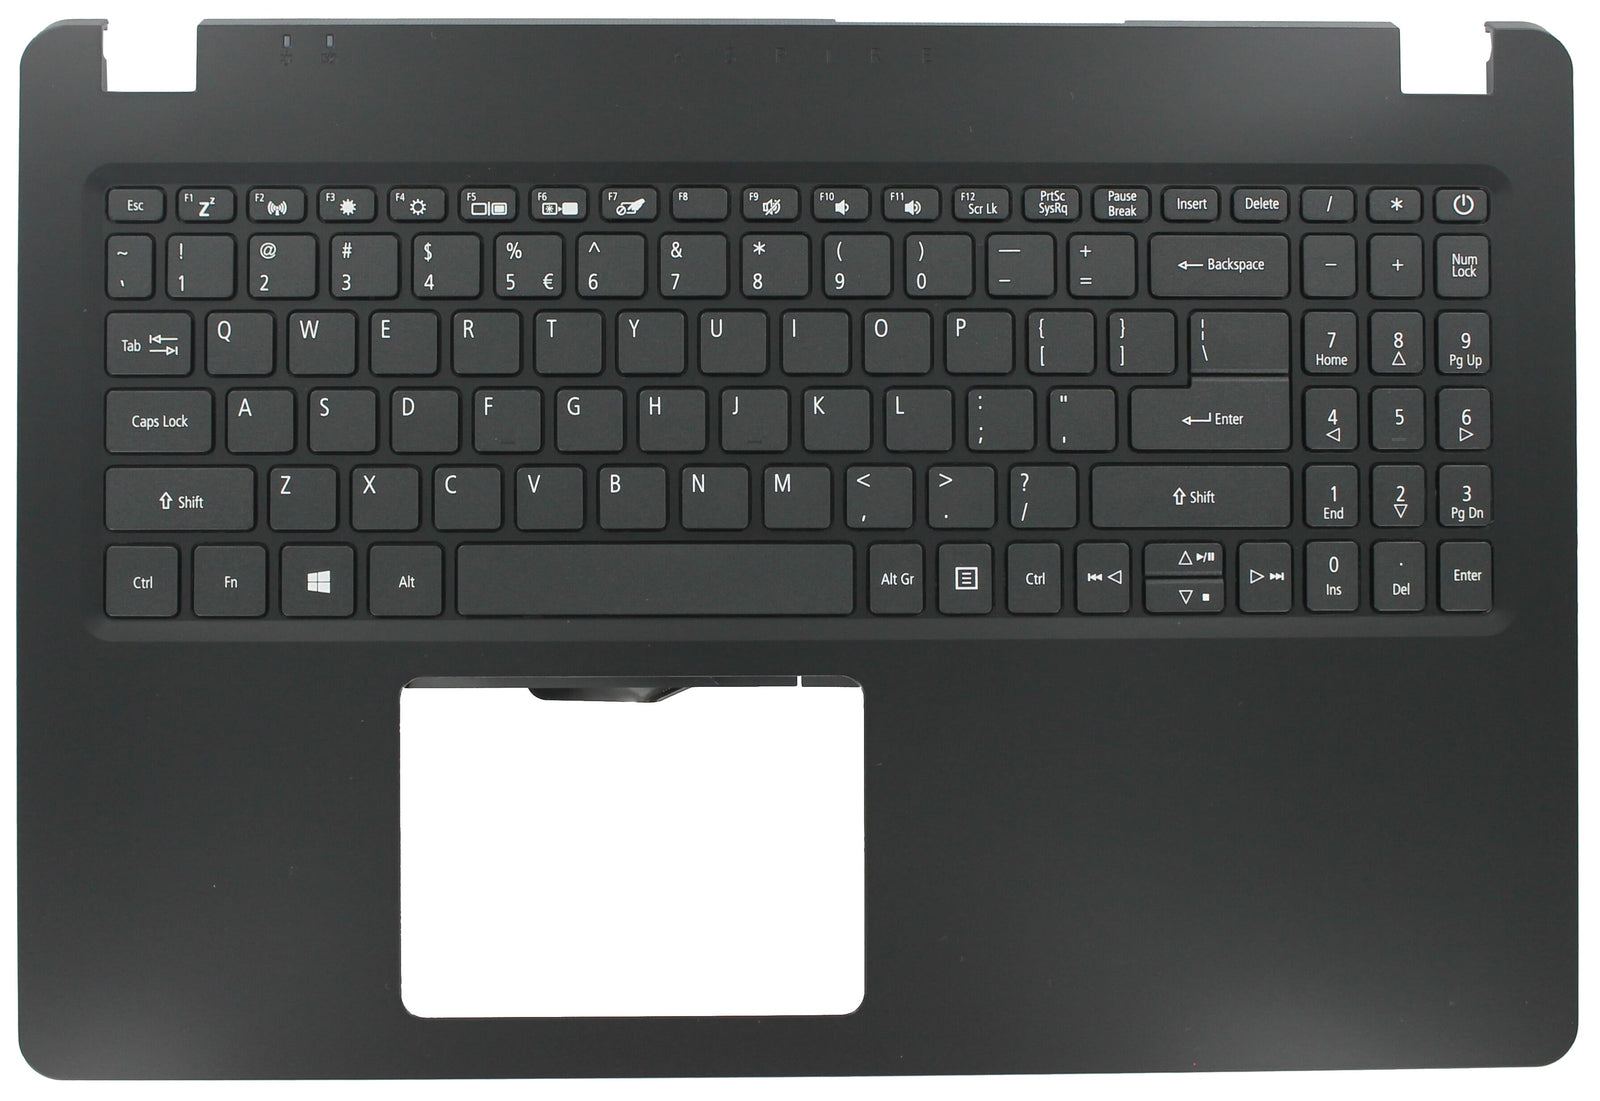 Acer Laptop Toetsenbord Qwerty US + Top Cover Zwart